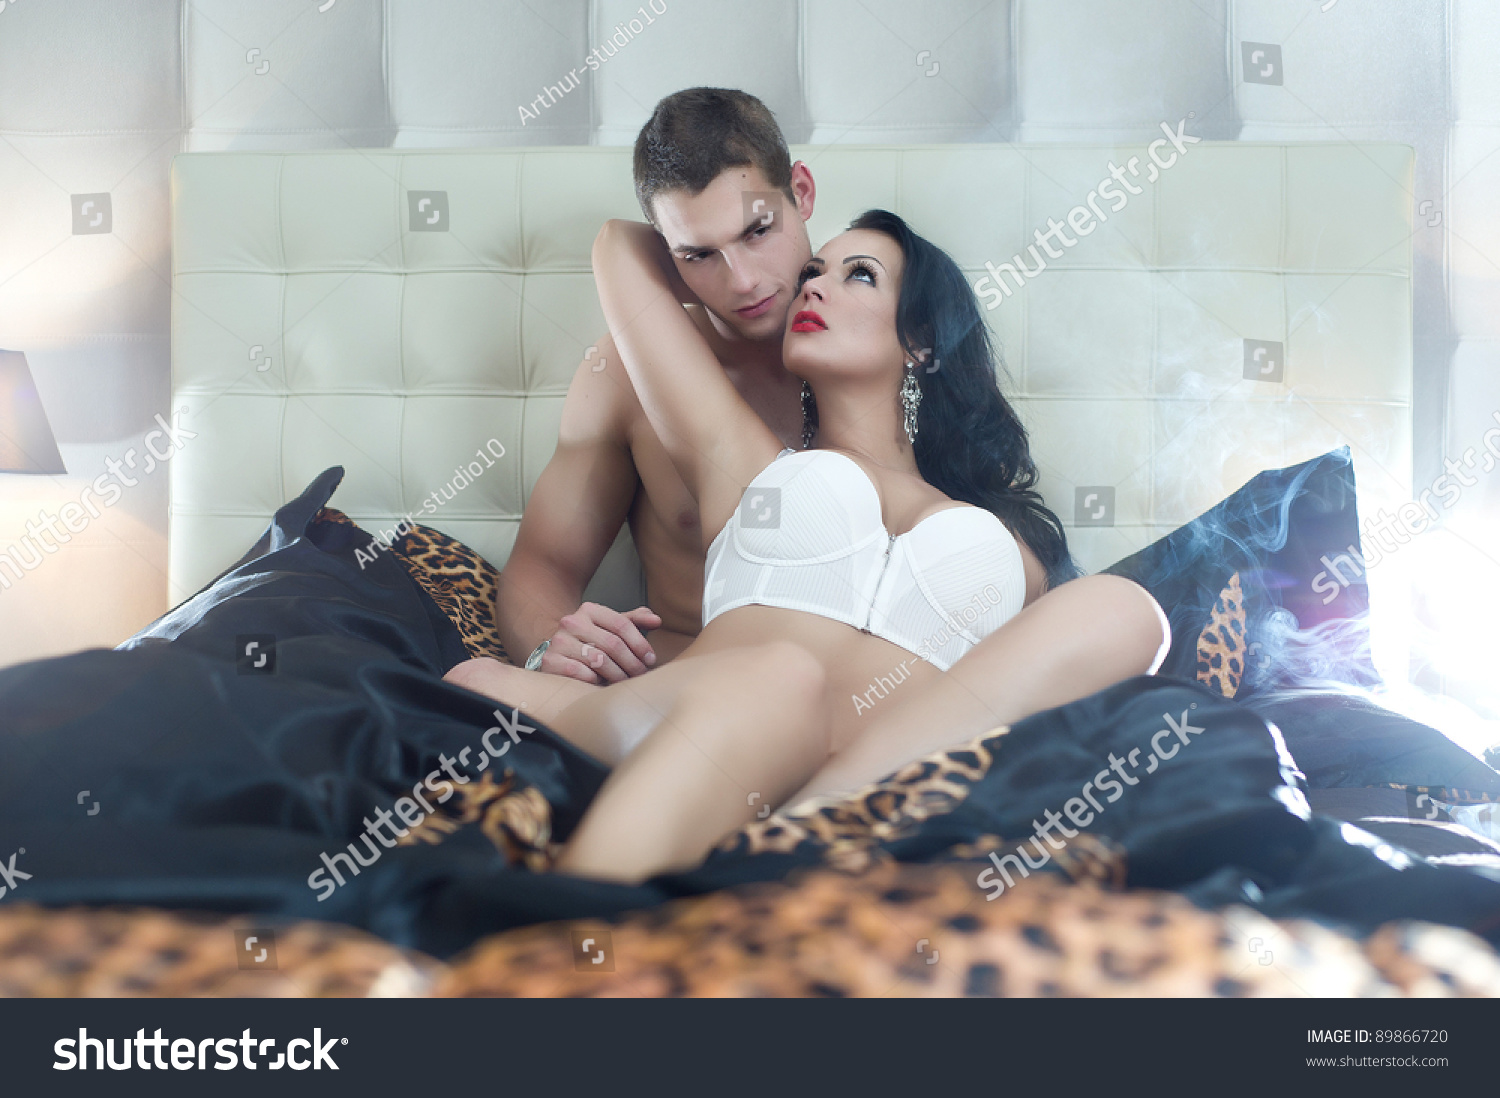 Sexy Couple Romantic Pose Stock Photo 89866720 | Shutterstock